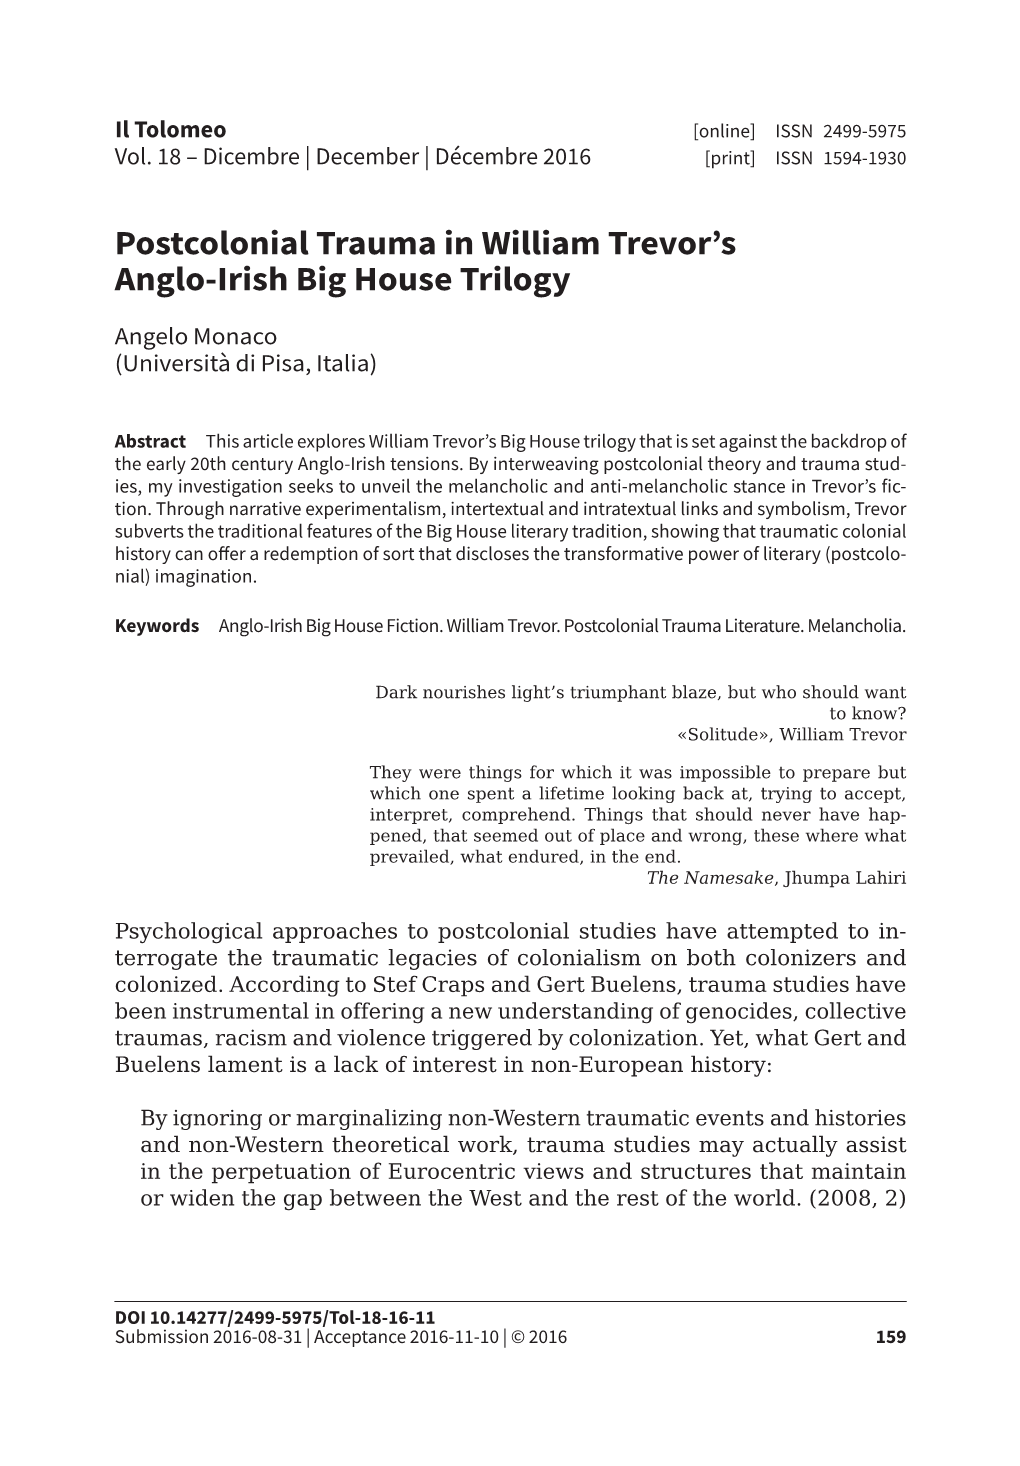 Postcolonial Trauma in William Trevor's Anglo-Irish Big House Trilogy